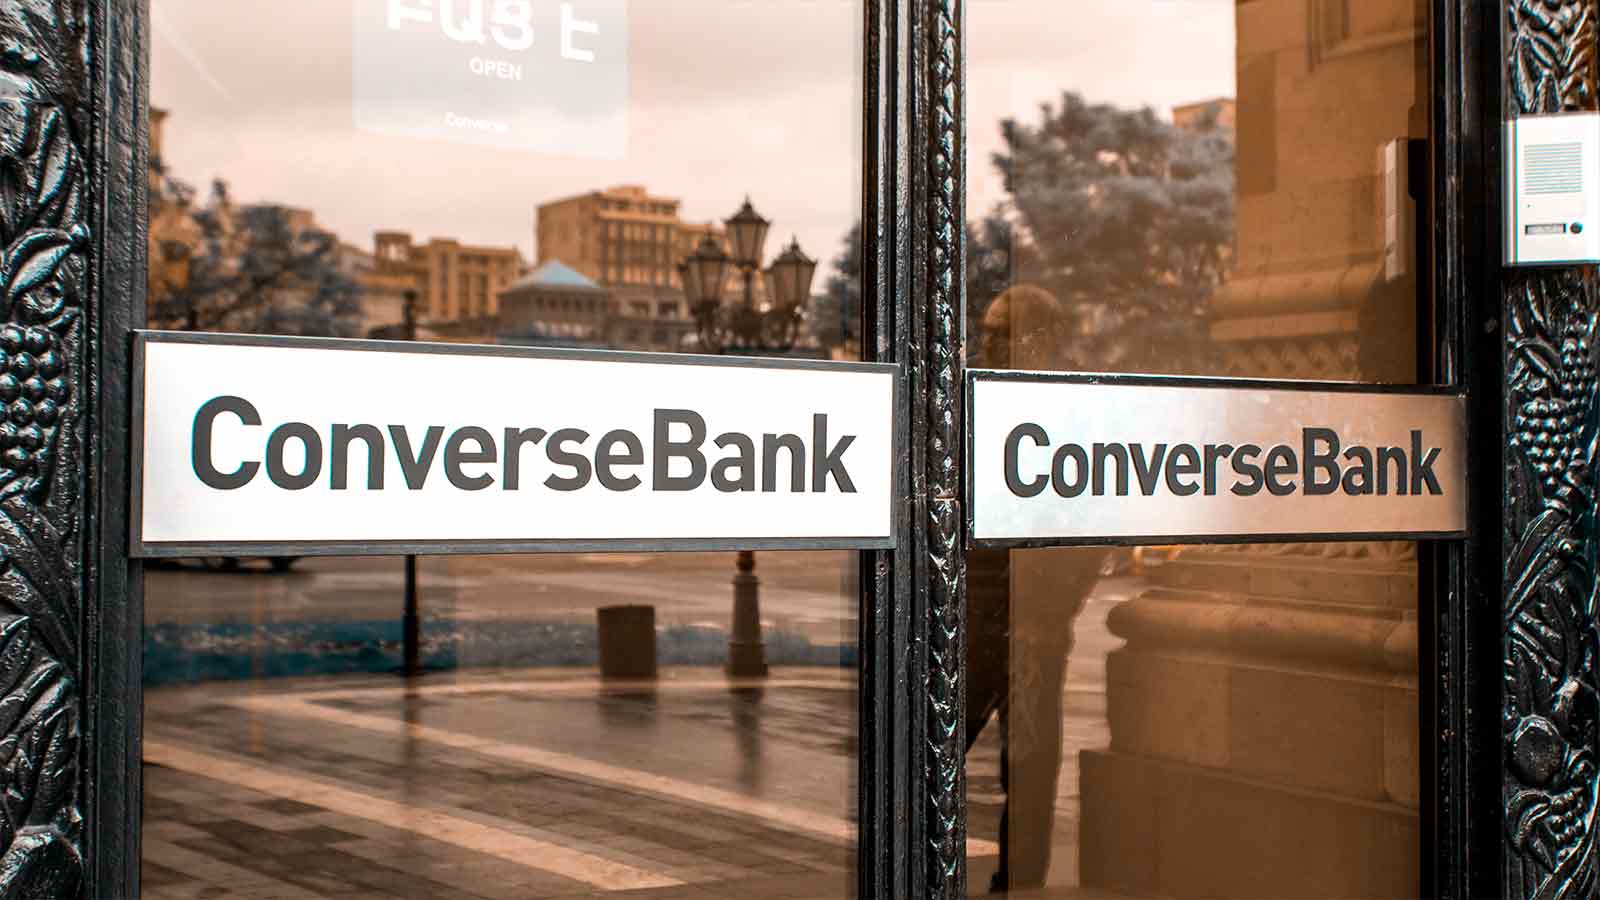 converse bank custom made aluminum sigange